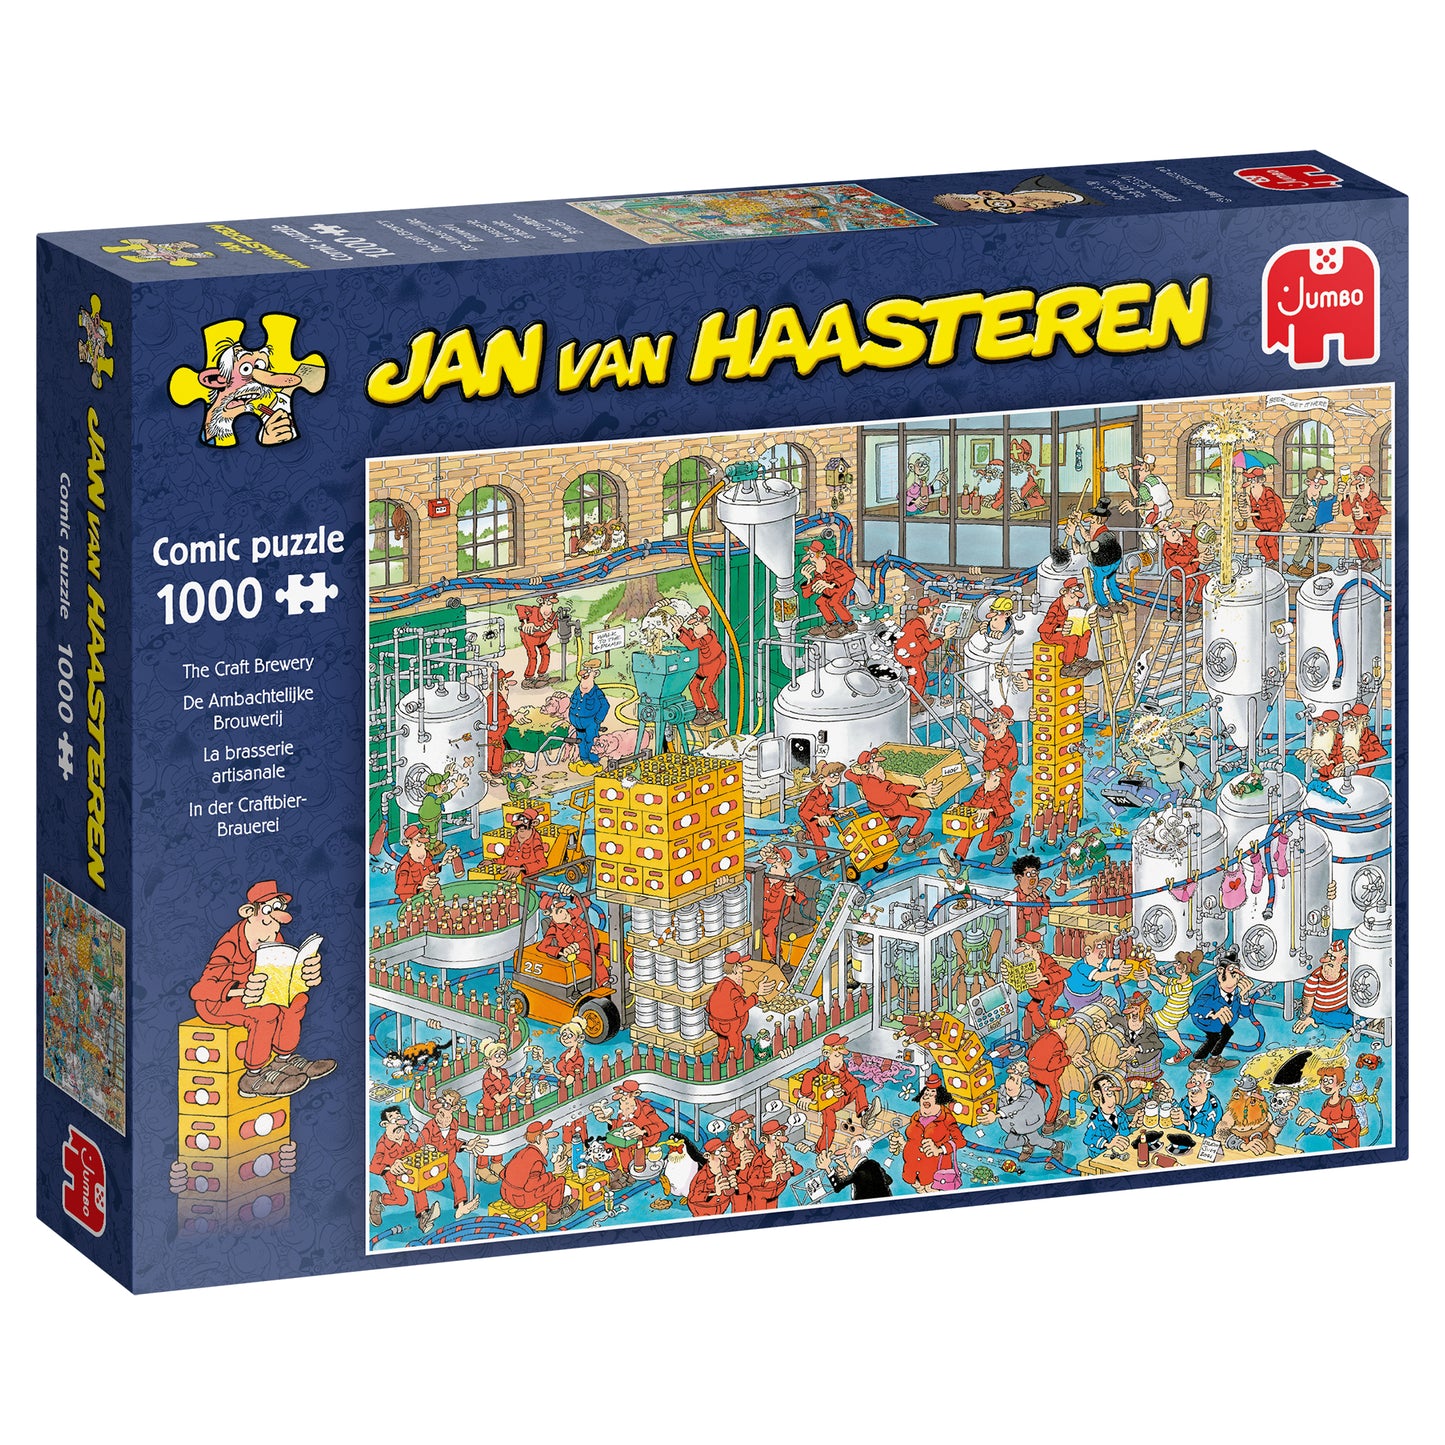 Jan Van Haasteren - The Craft Brewery - 1000 Piece Jigsaw Puzzle